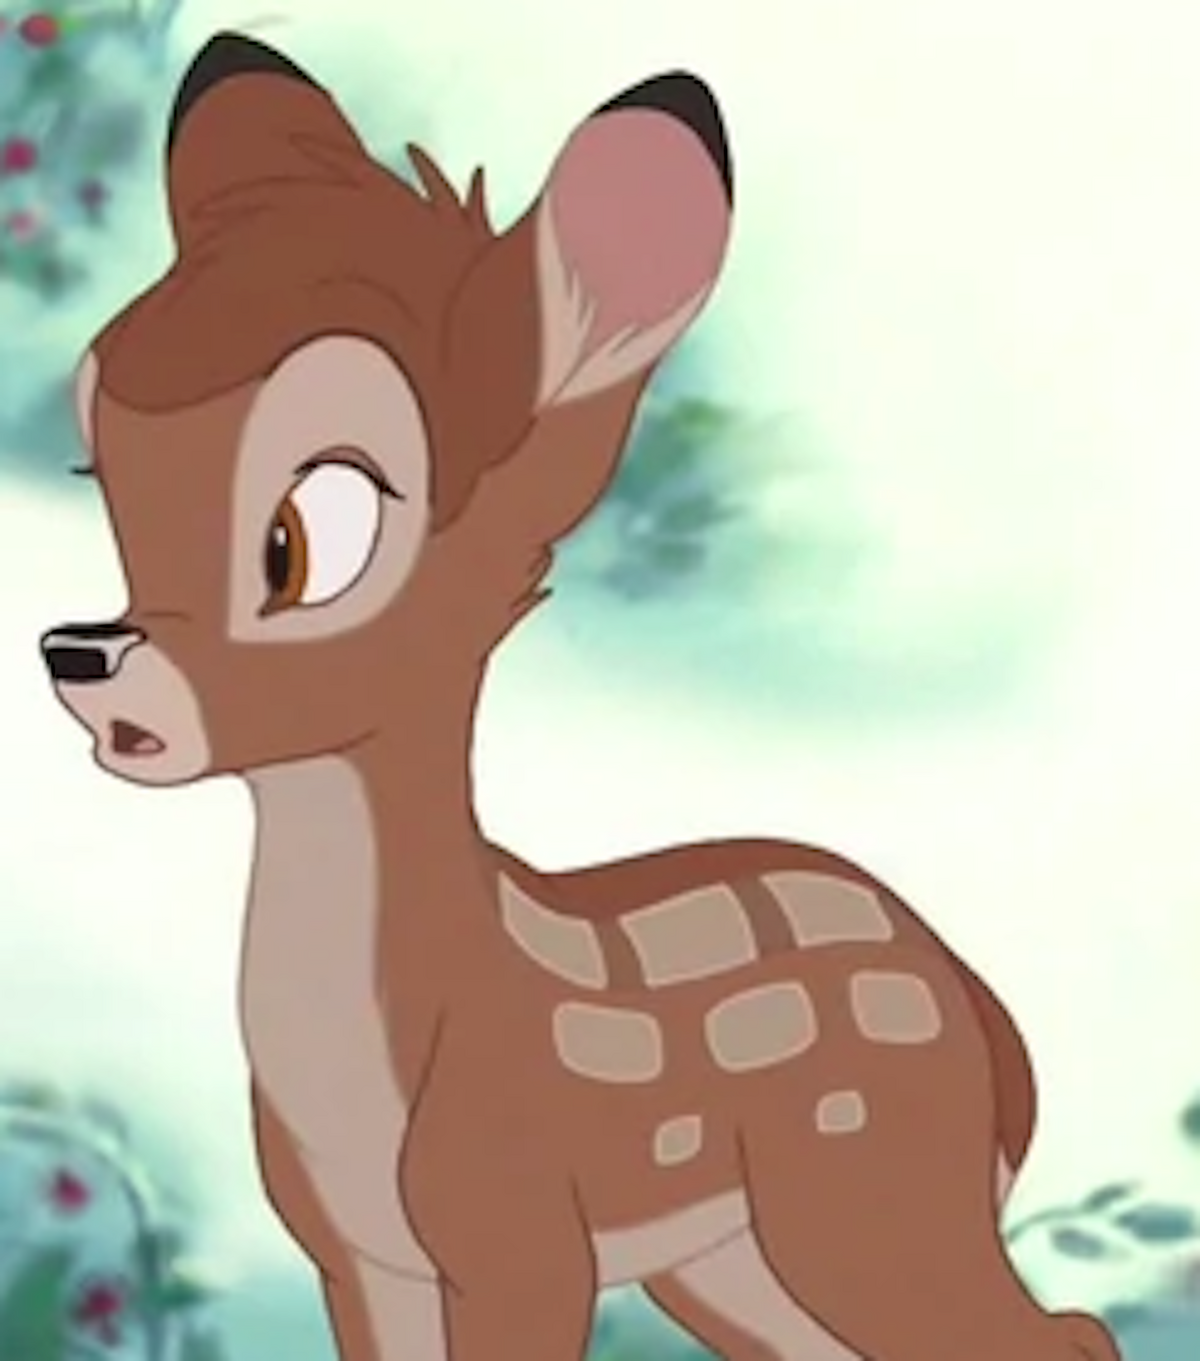 bambi geno screencaps